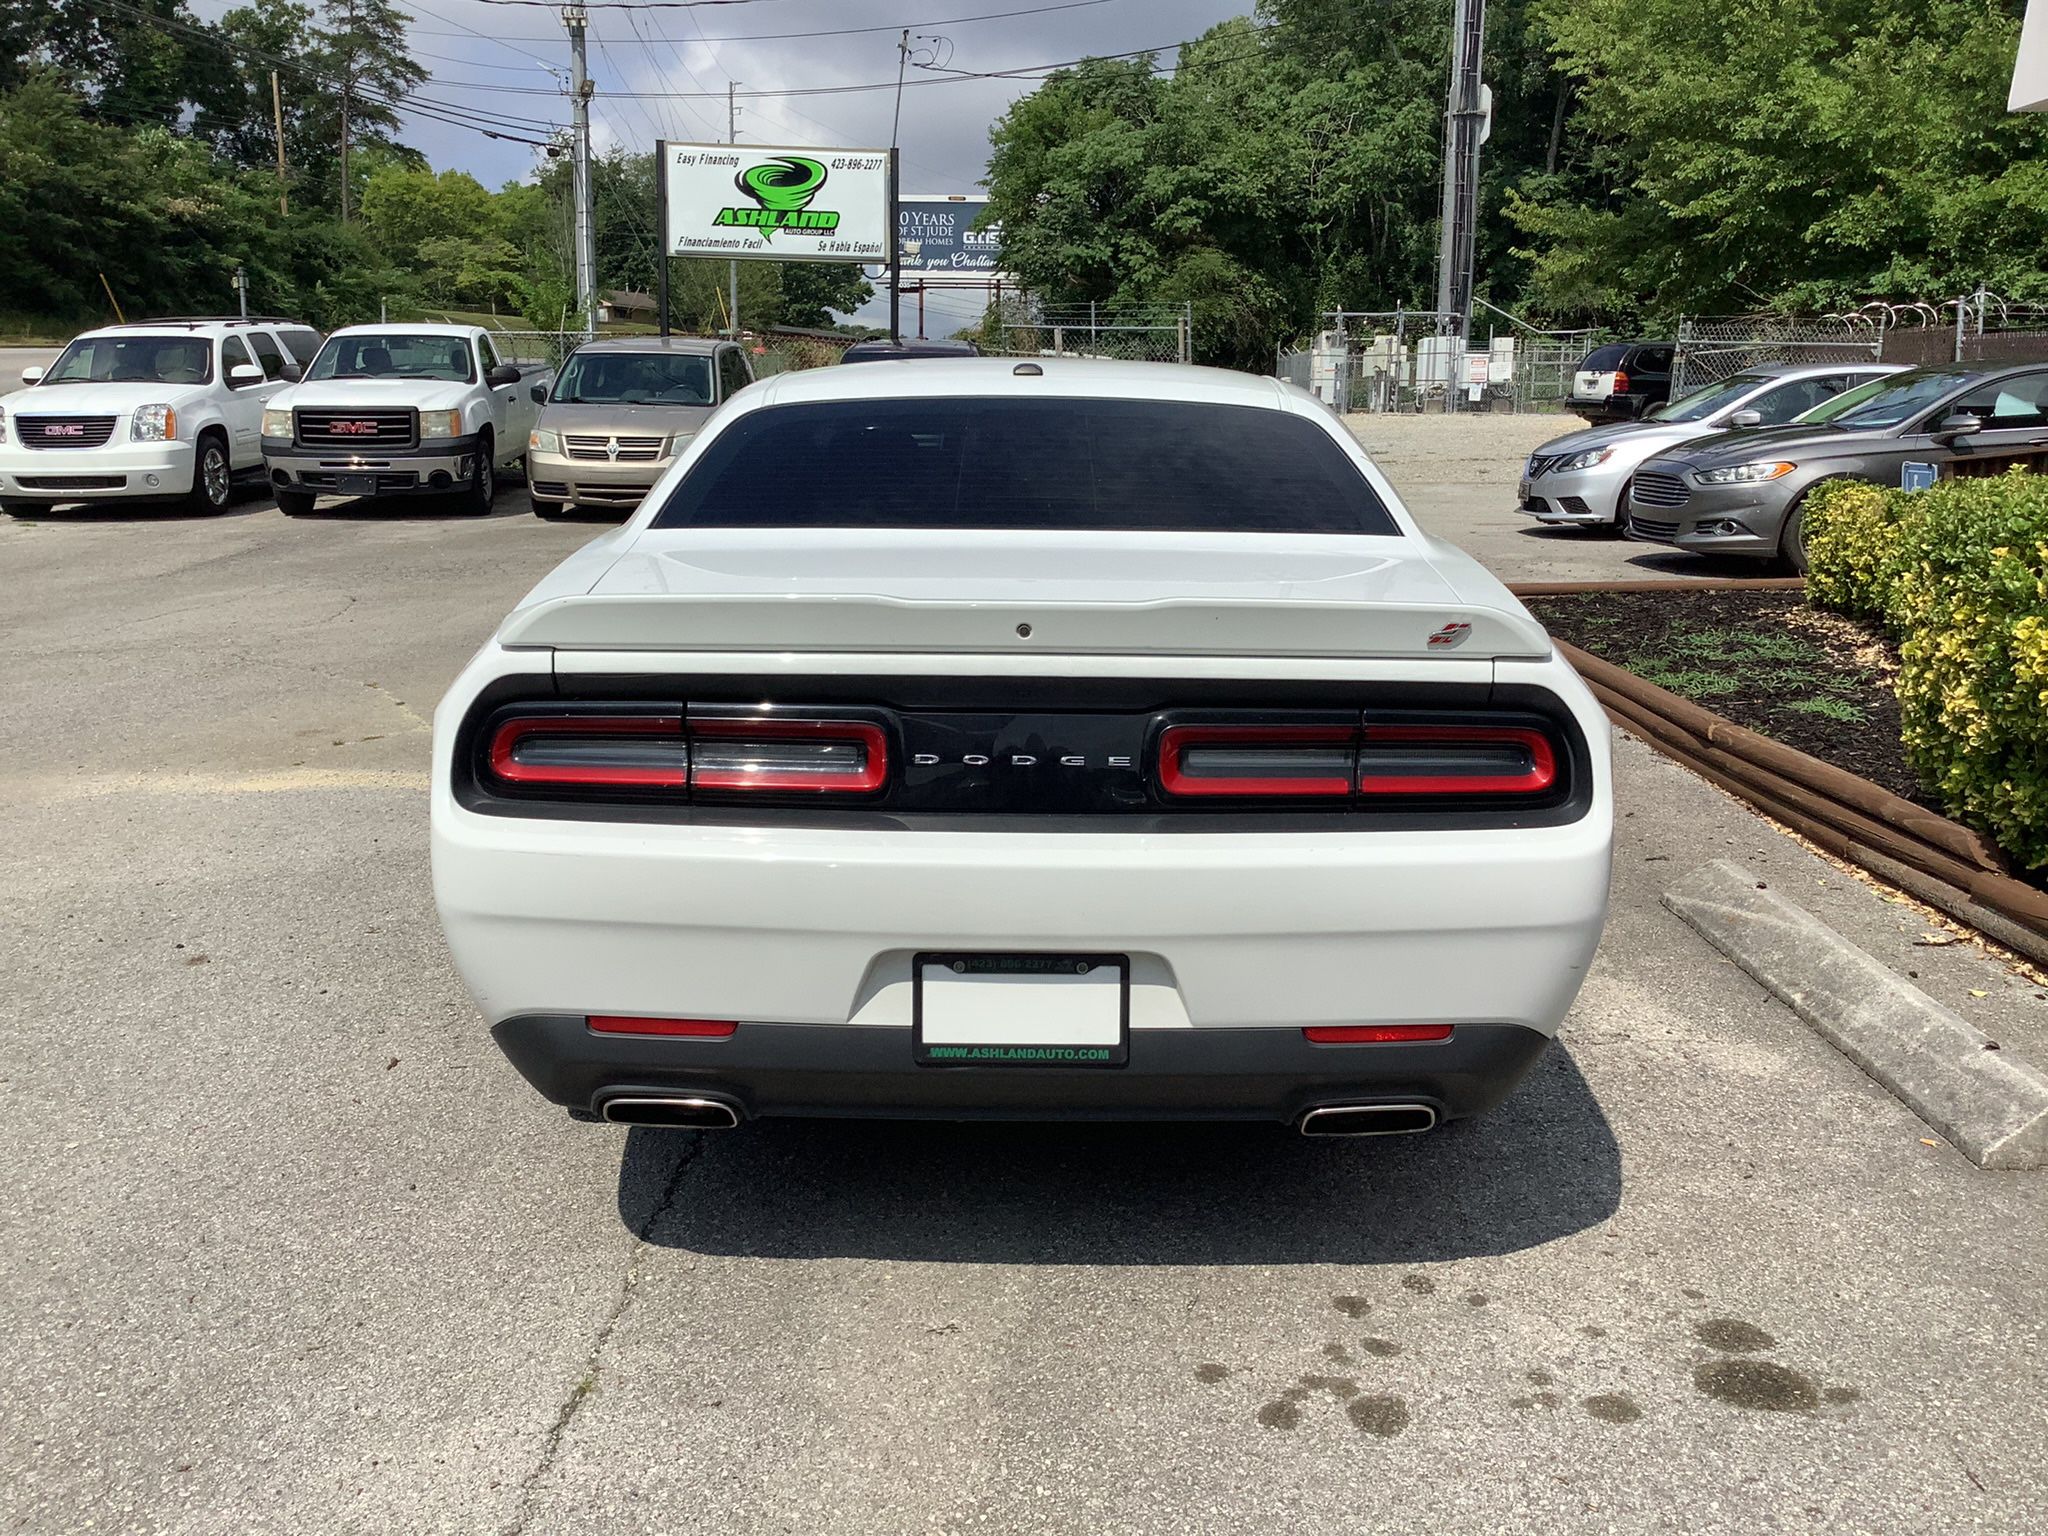 2019 Dodge Challenger